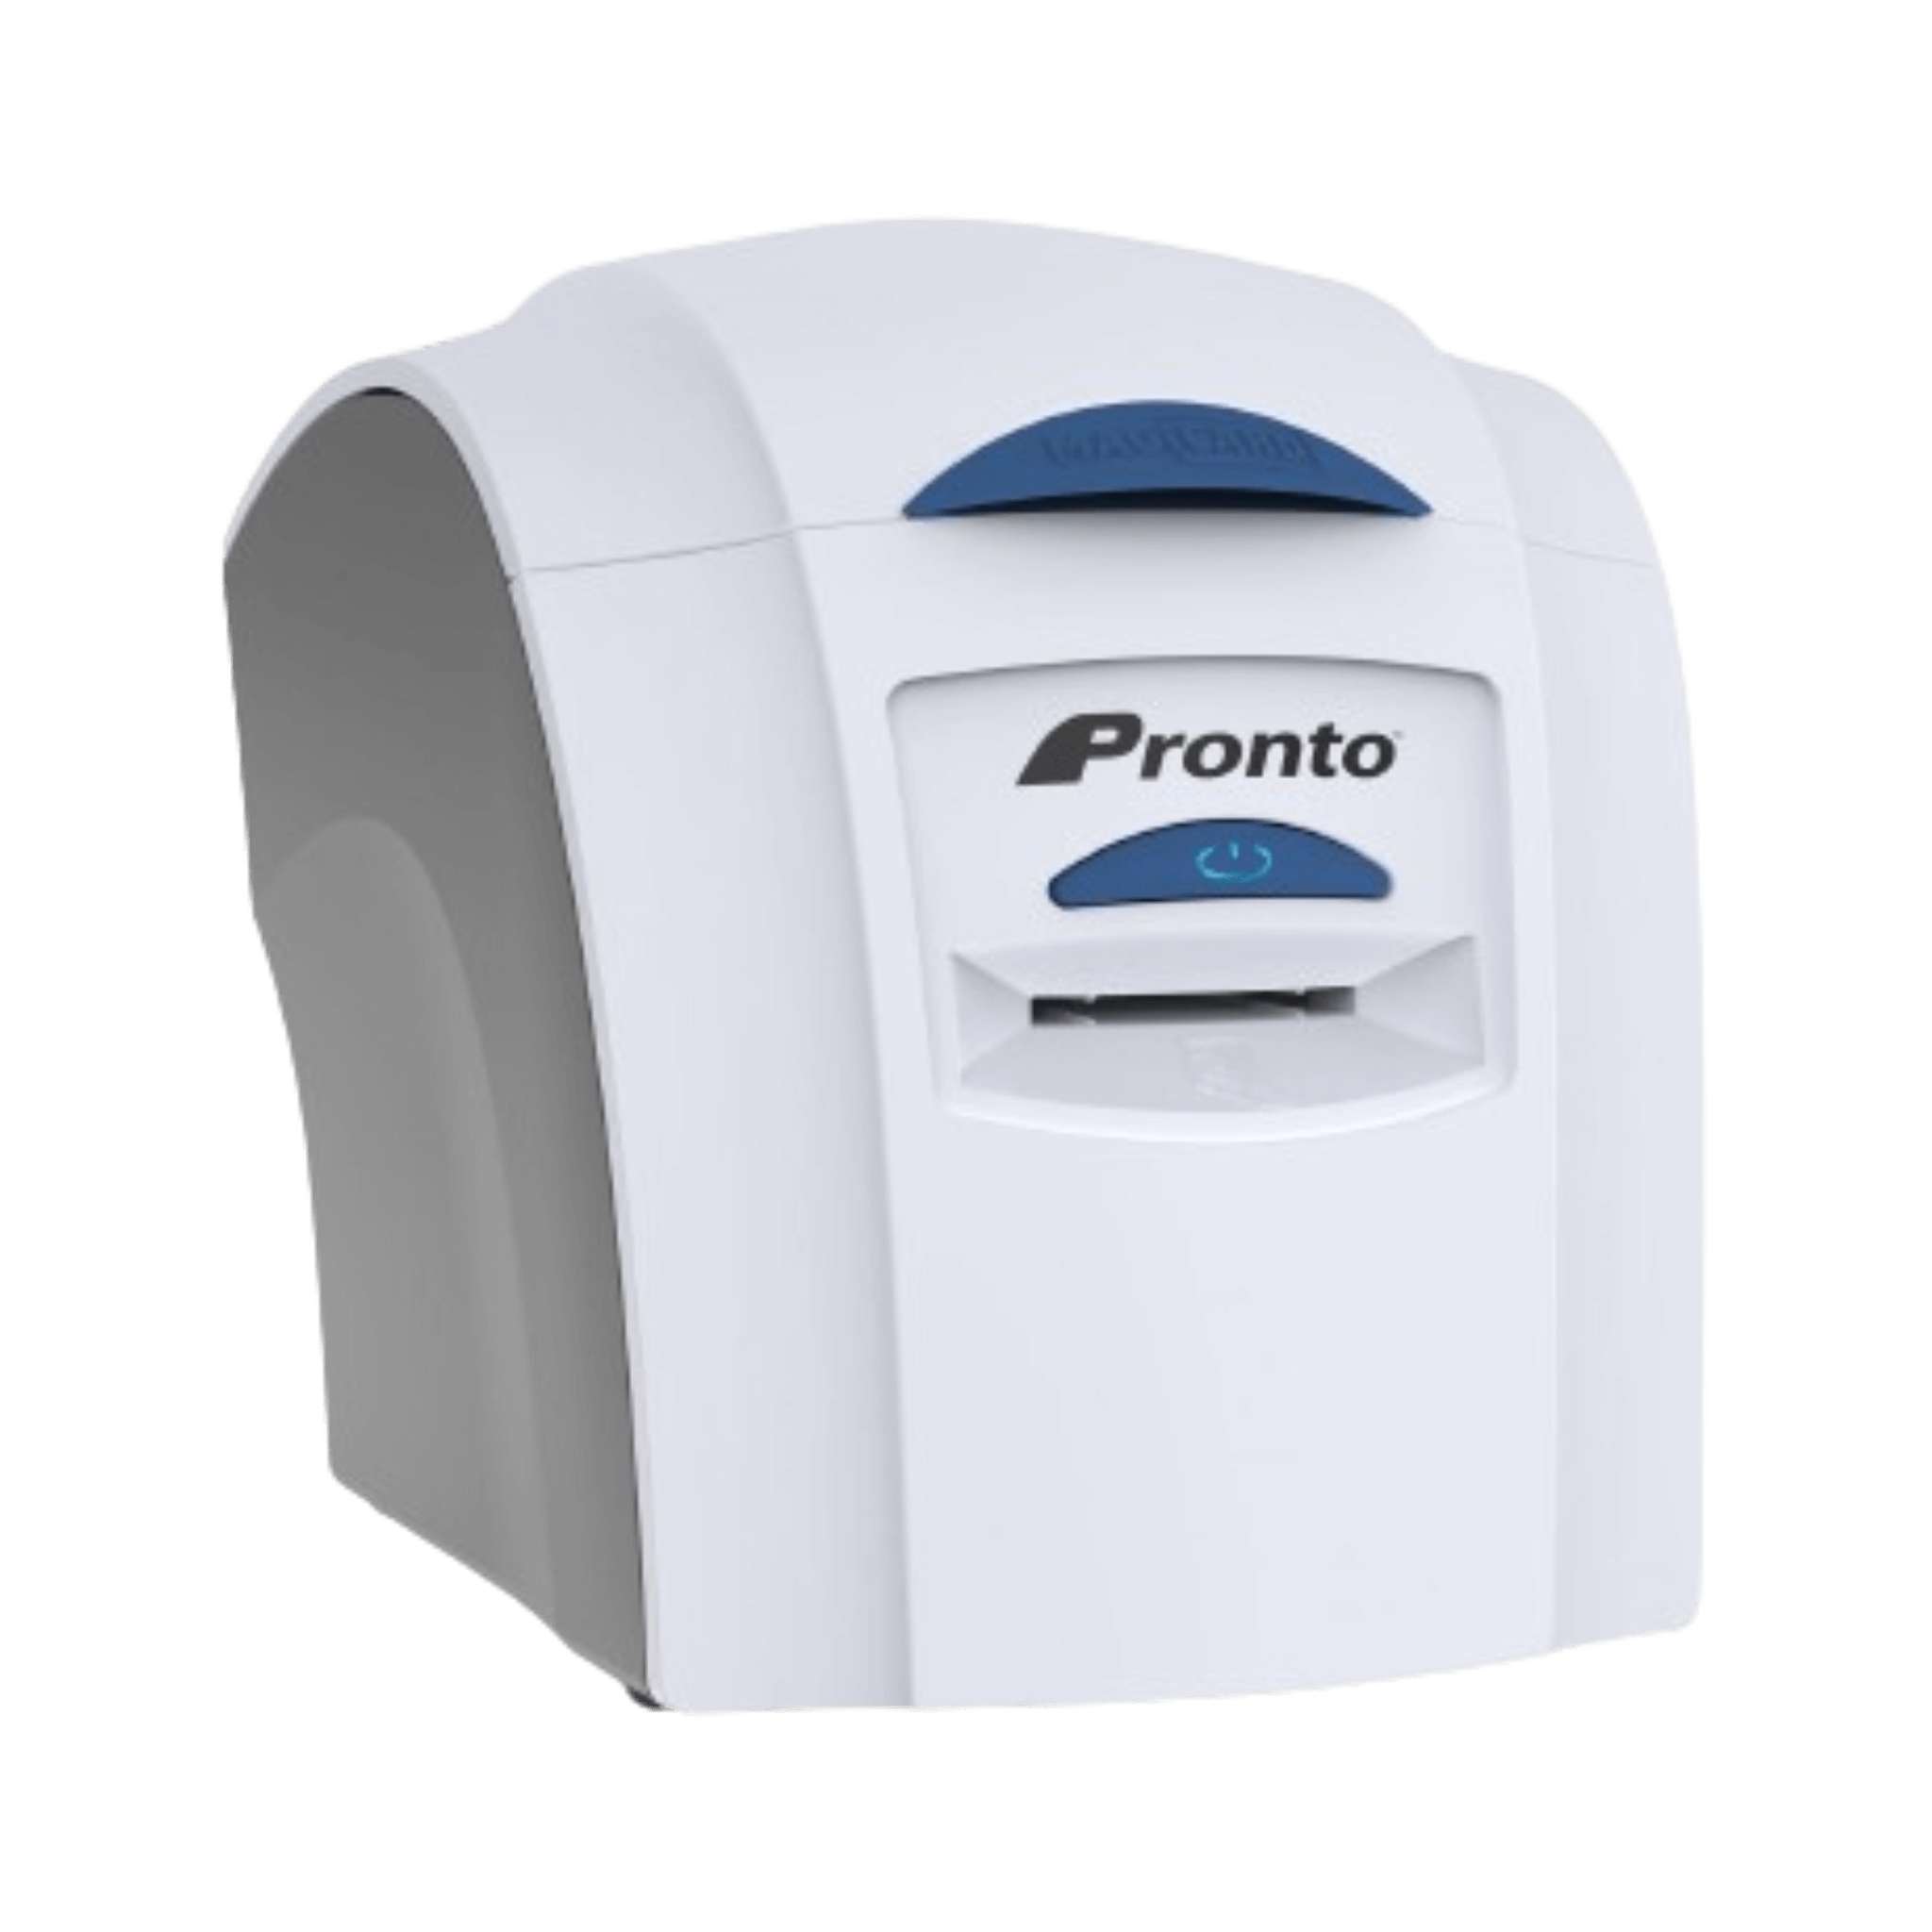 Magicard Pronto Starter ID Card Printer